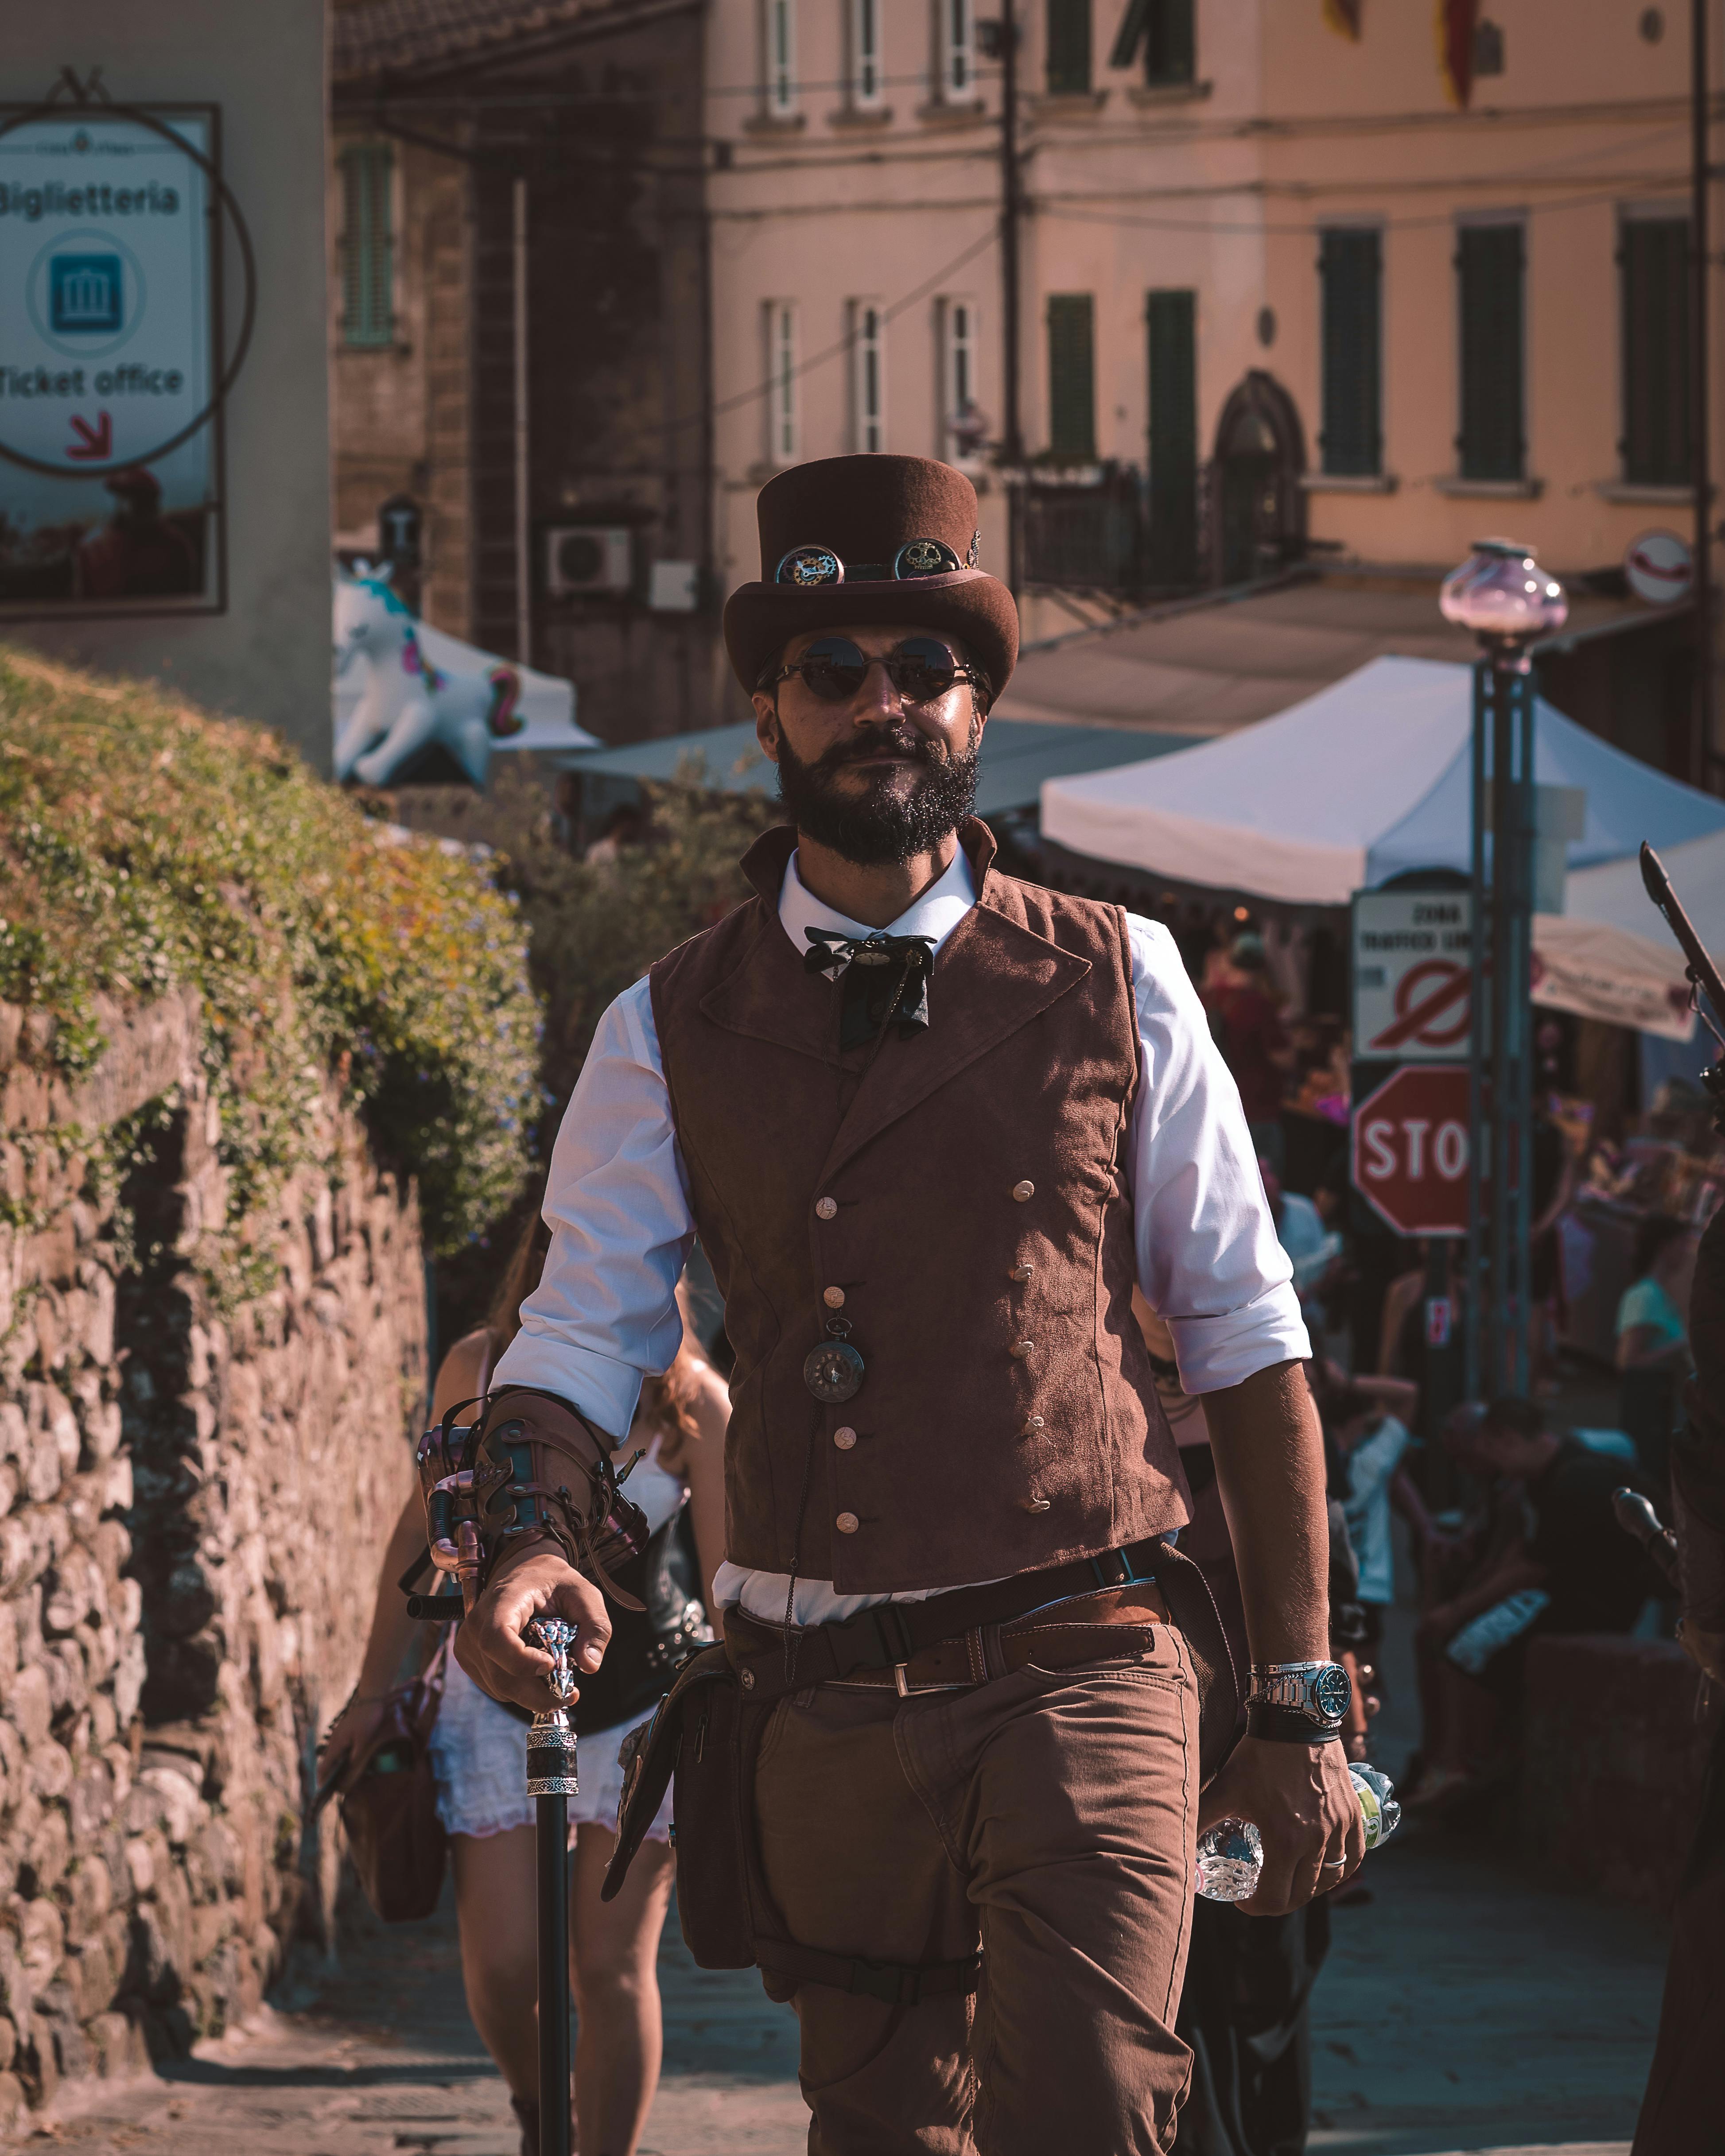 steampunk man costume